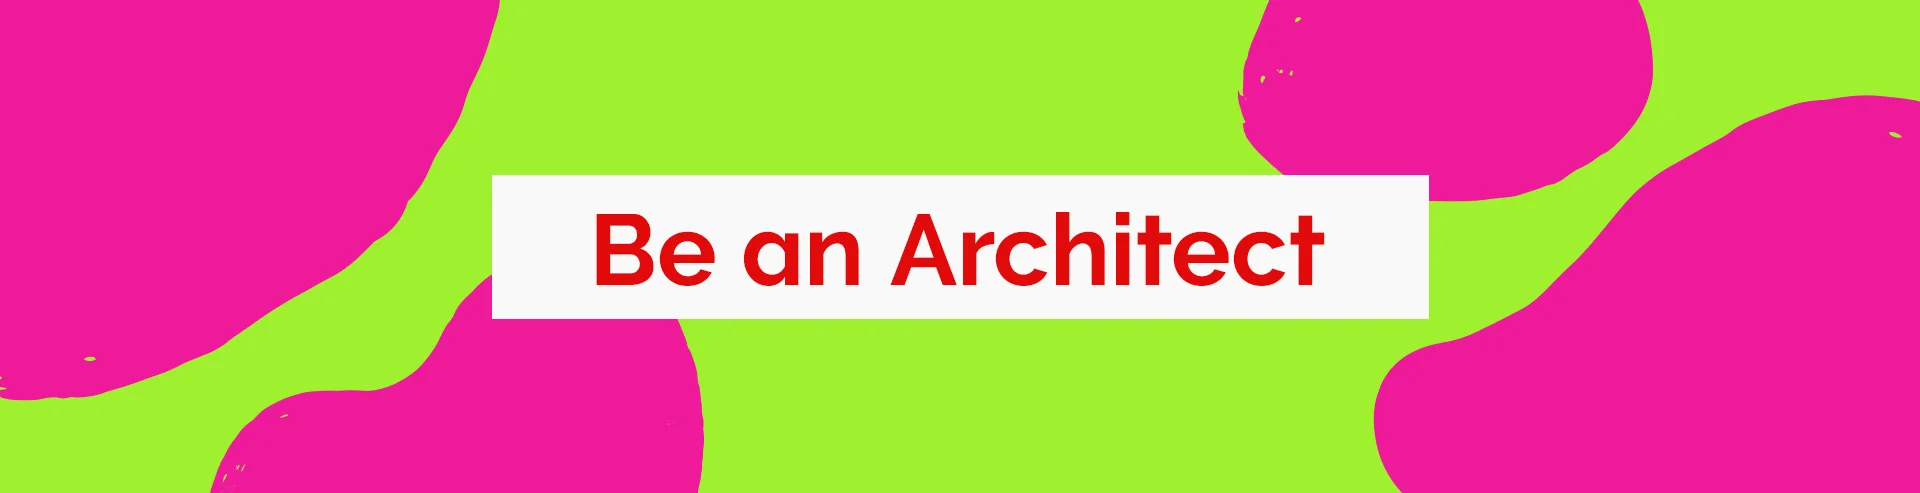 Full-Width-Gift-Idea-Be-an-Architect-Desktop.webp